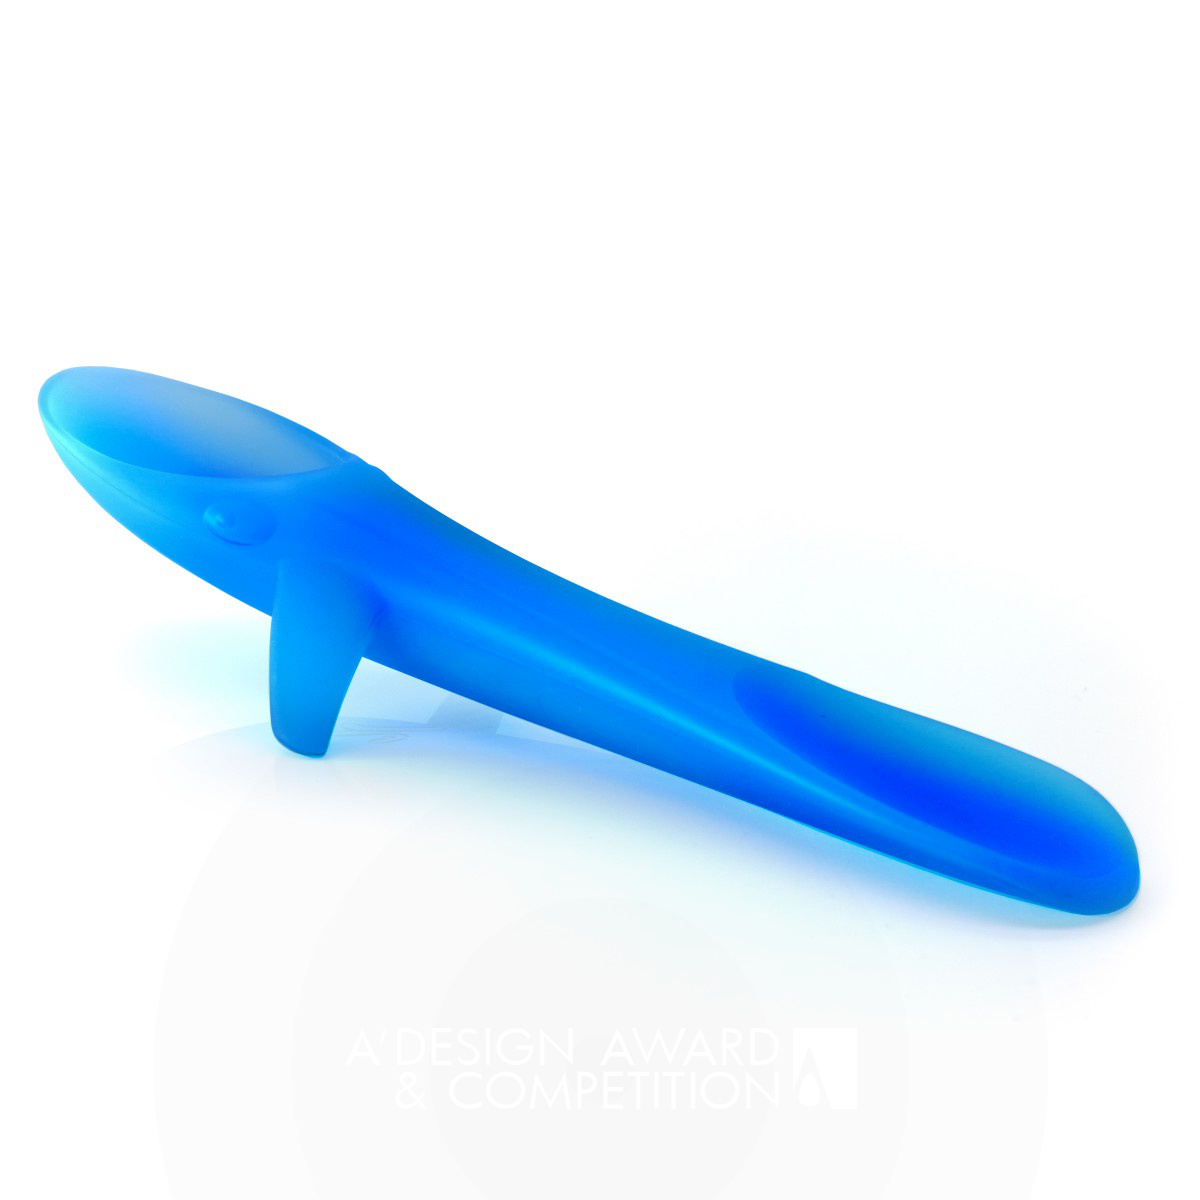 Whale spoon